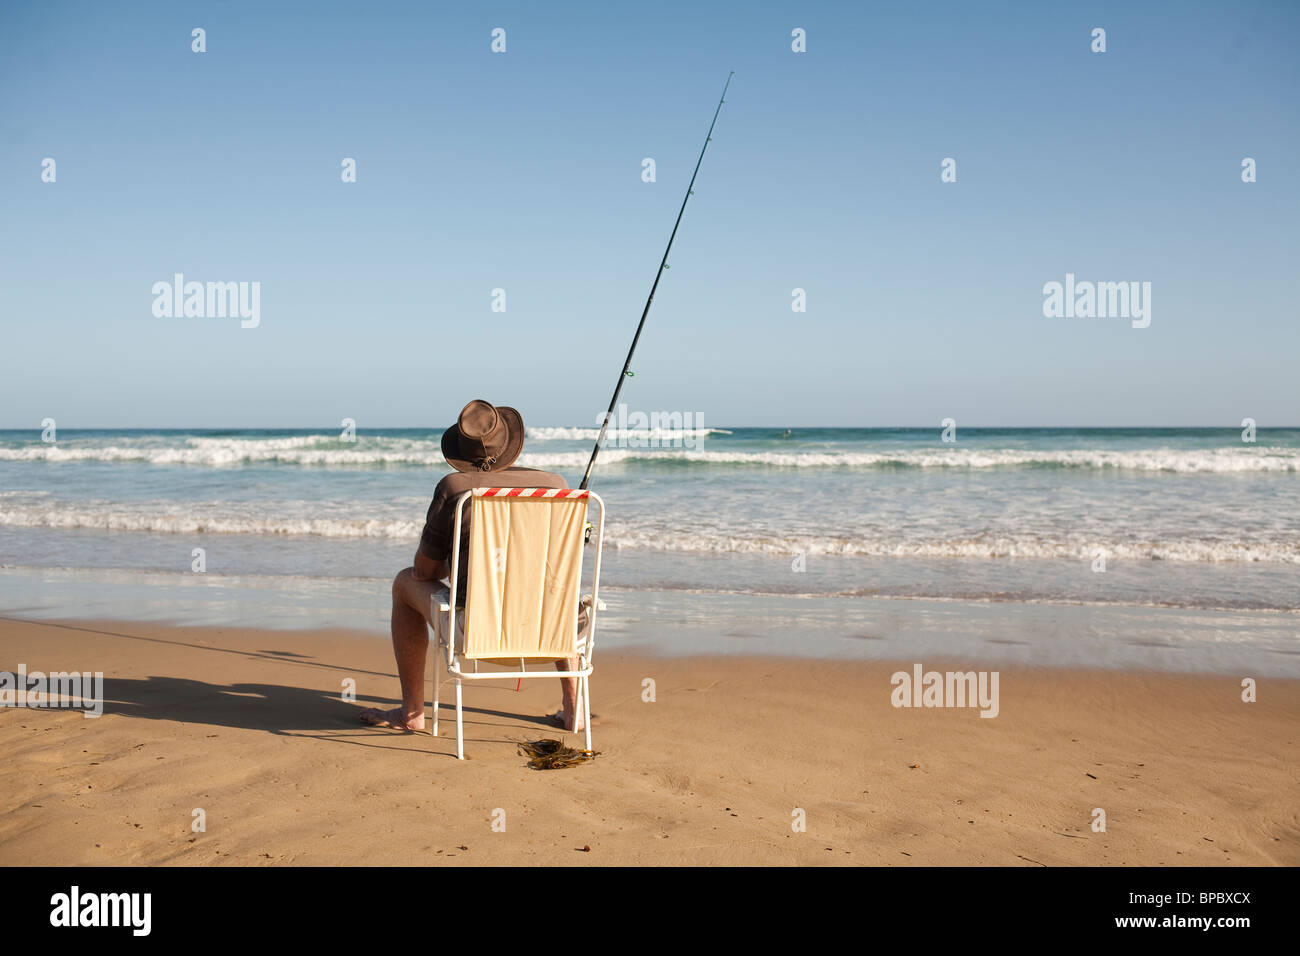 https://c8.alamy.com/comp/BPBXCX/fisherman-sitting-in-a-beach-chair-surf-casting-in-the-ocean-BPBXCX.jpg